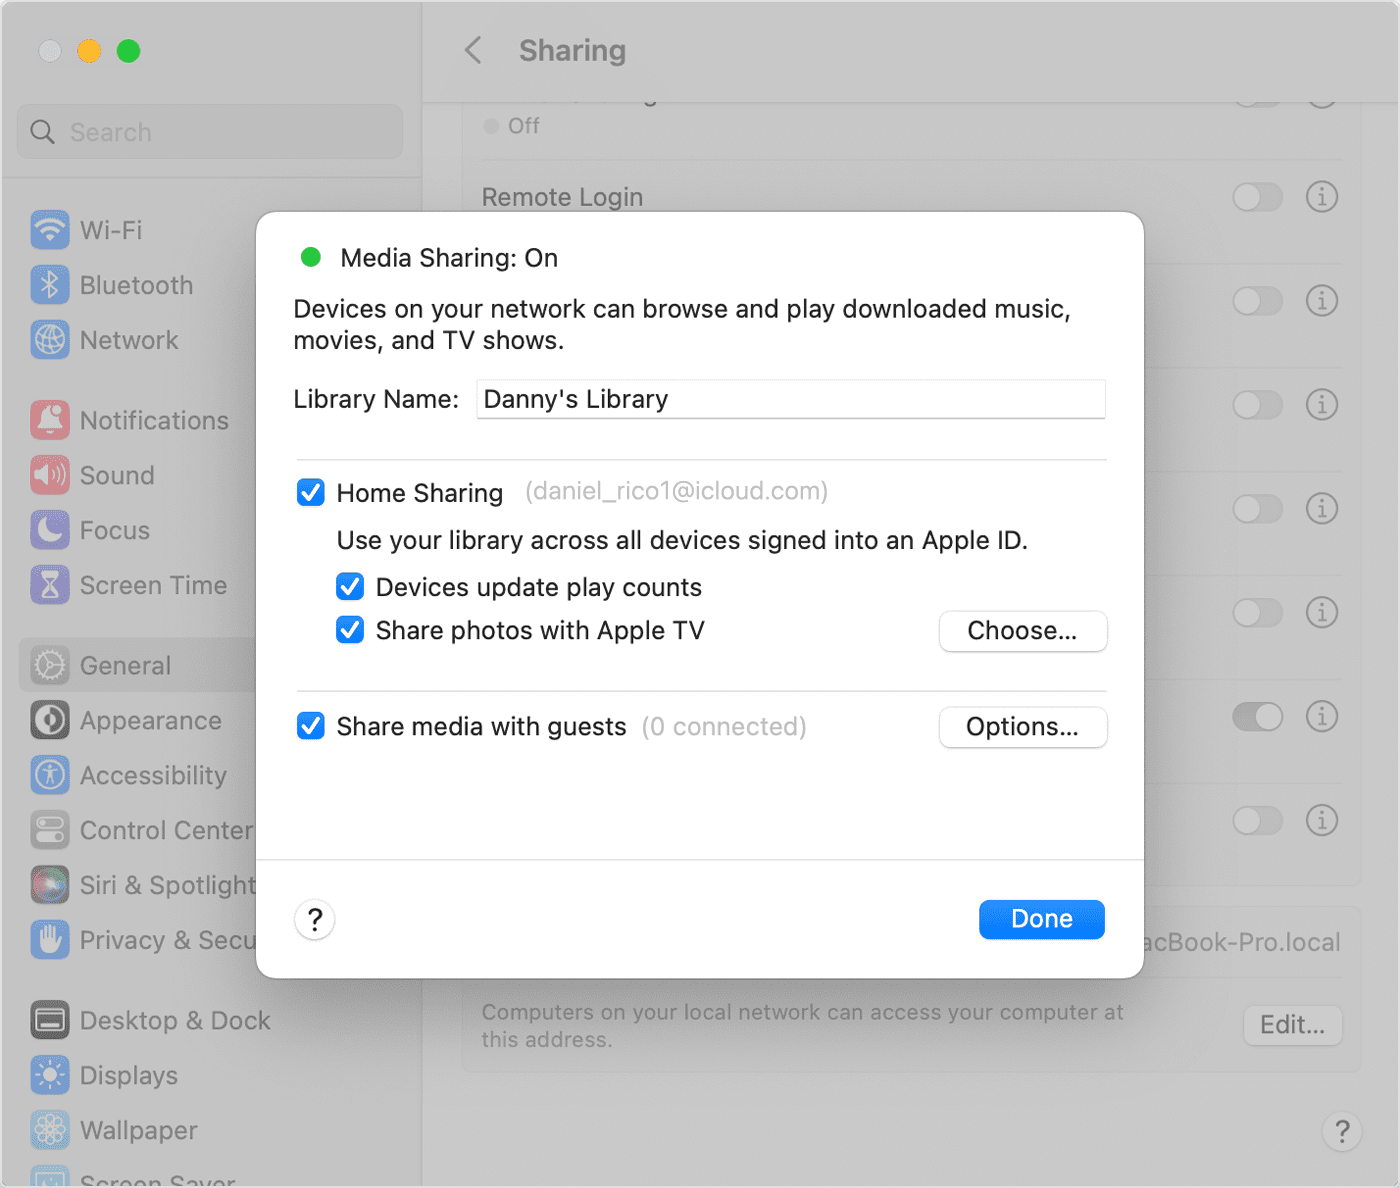 How to setup Home Sharing on Mac